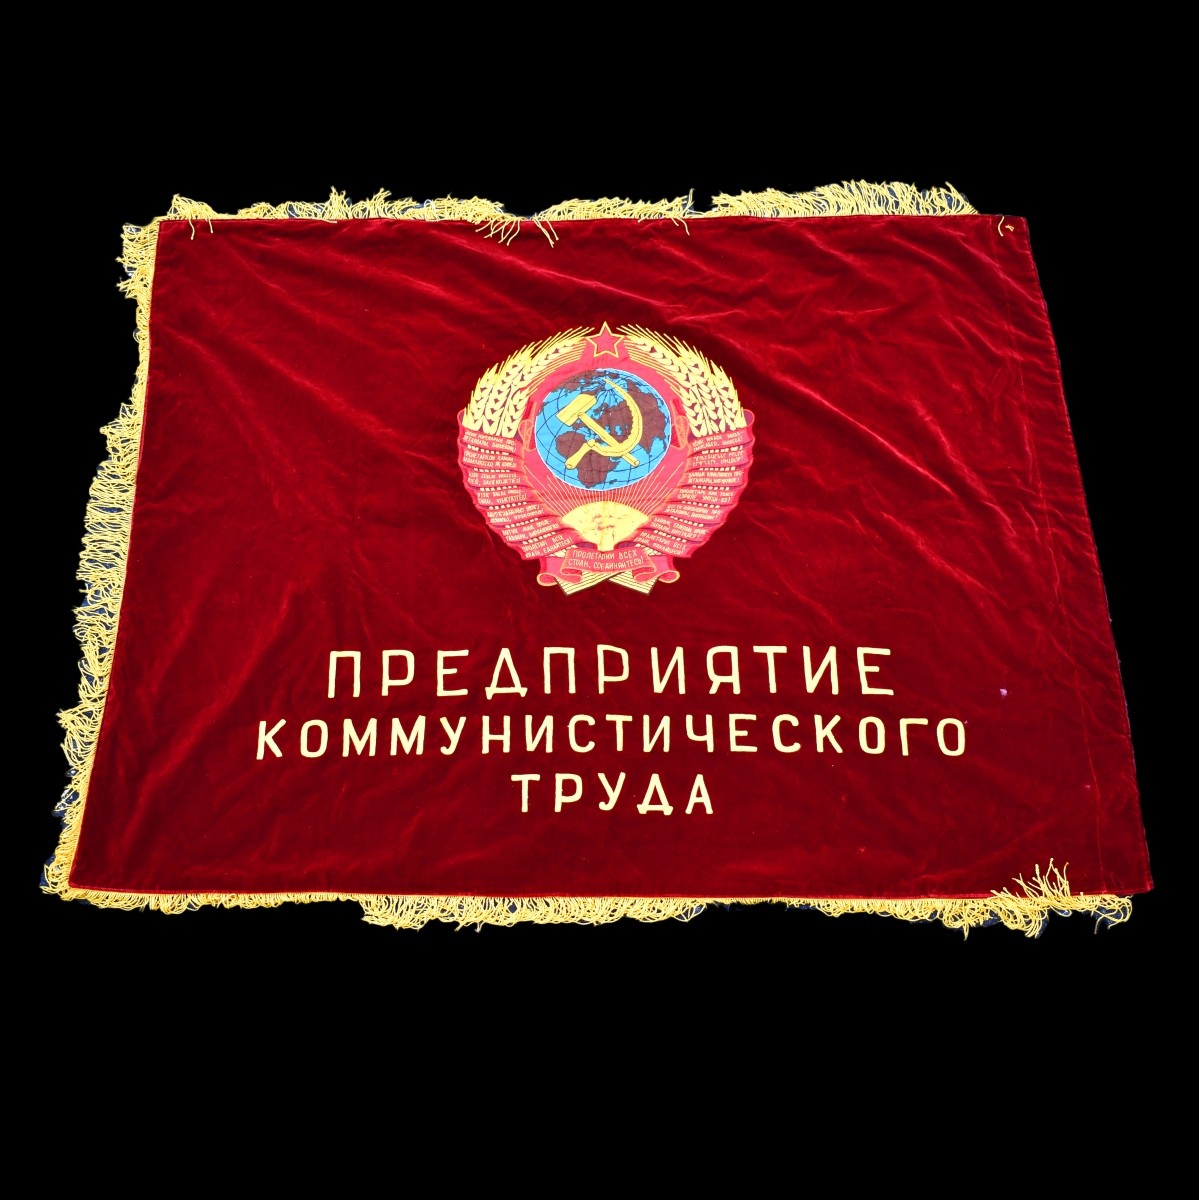 Russian Propaganda Banner